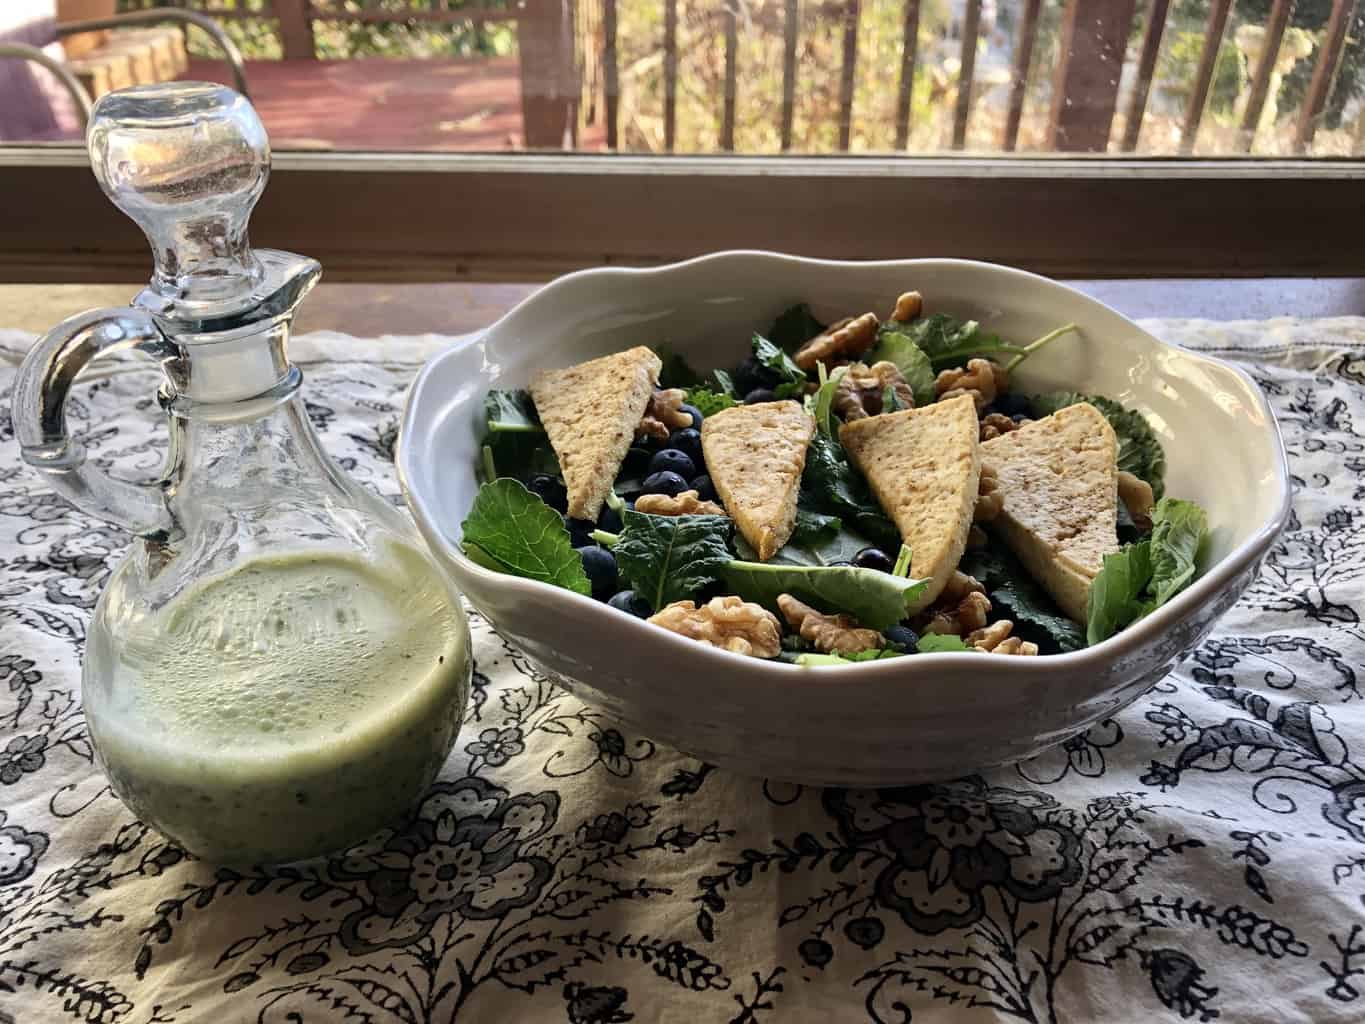 Tangy Yogurt Dessing Recipe for Kale Salad